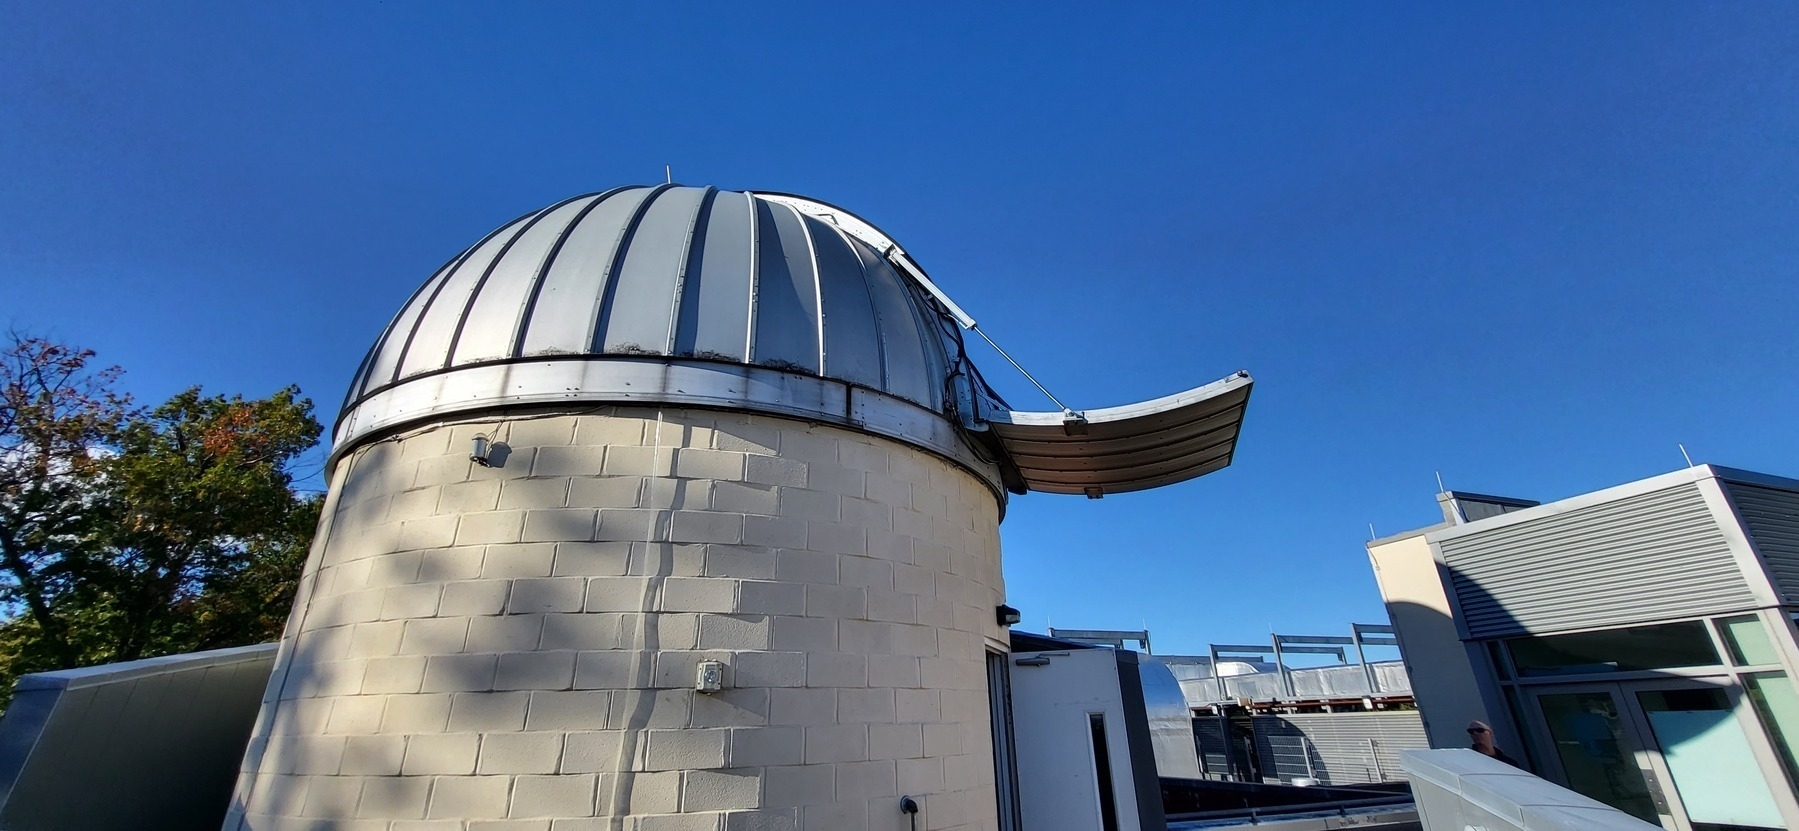 The George Mason University Observatory 